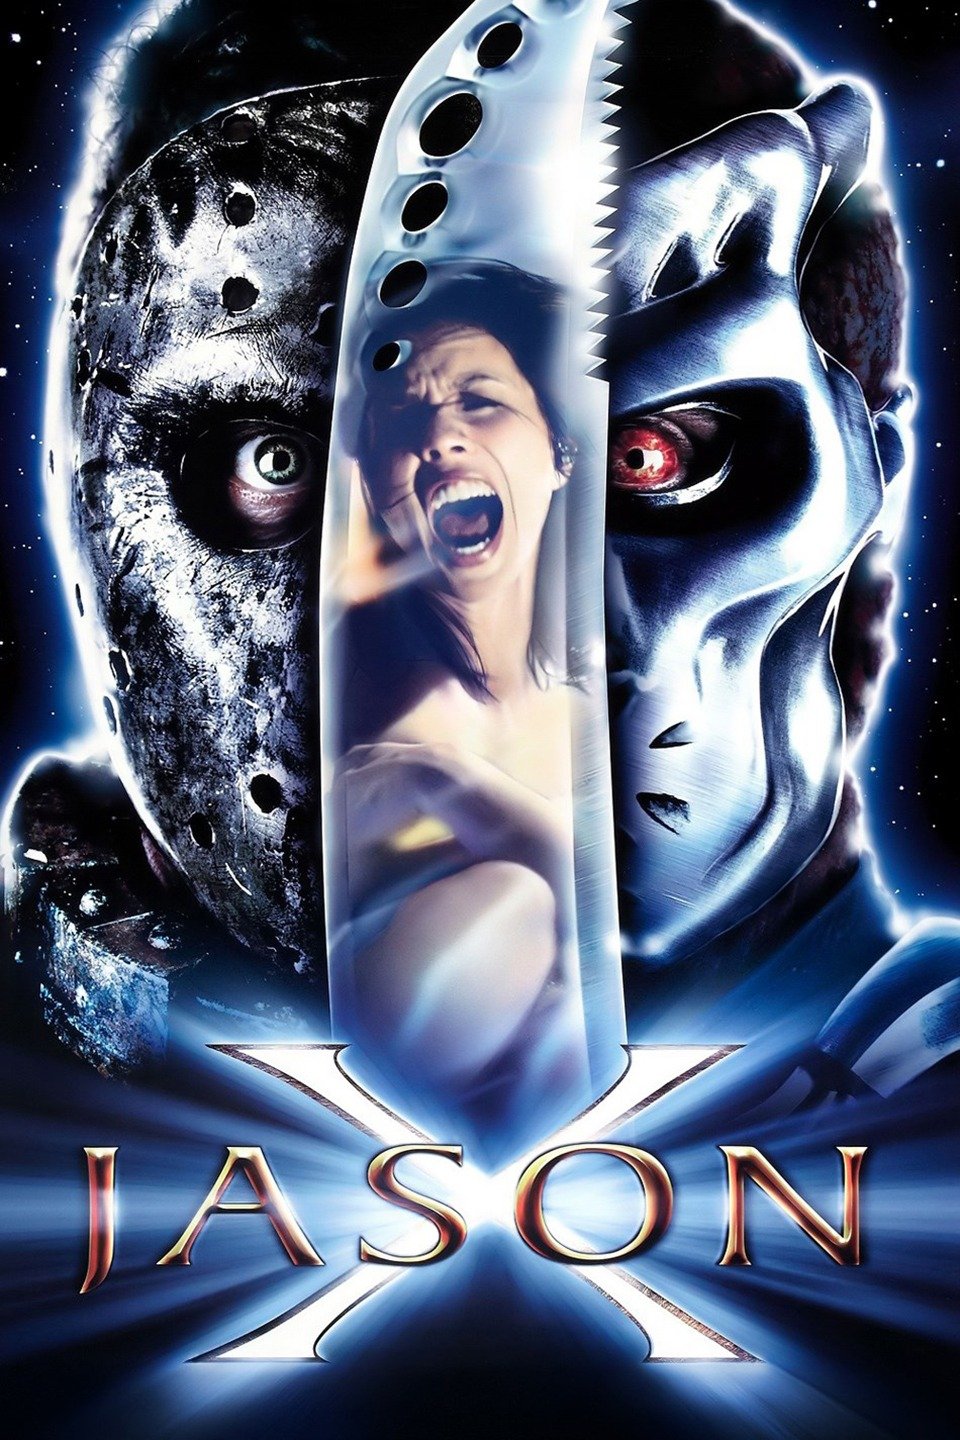 [MINI-HD] Jason X (2001) เจสัน…โหดพันธุ์ใหม่ศุกร์ 13X [1080p] [พากย์ไทย 5.1 + อังกฤษ 5.1] [บรรยายไทย + อังกฤษ] [เสียงไทย + ซับไทย] [ONE2UP]